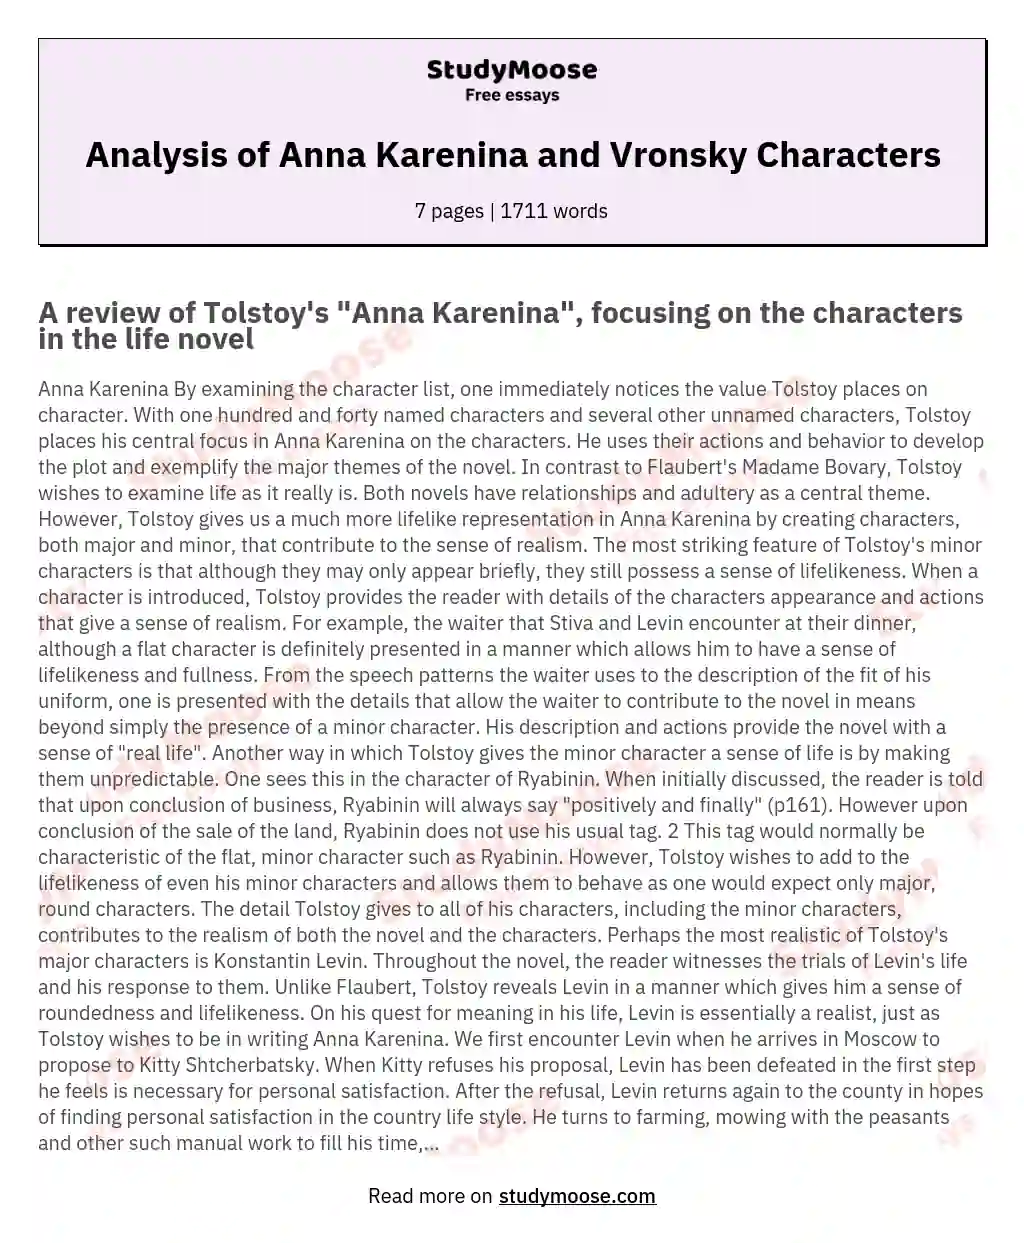 Analysis of Anna Karenina and Vronsky Characters